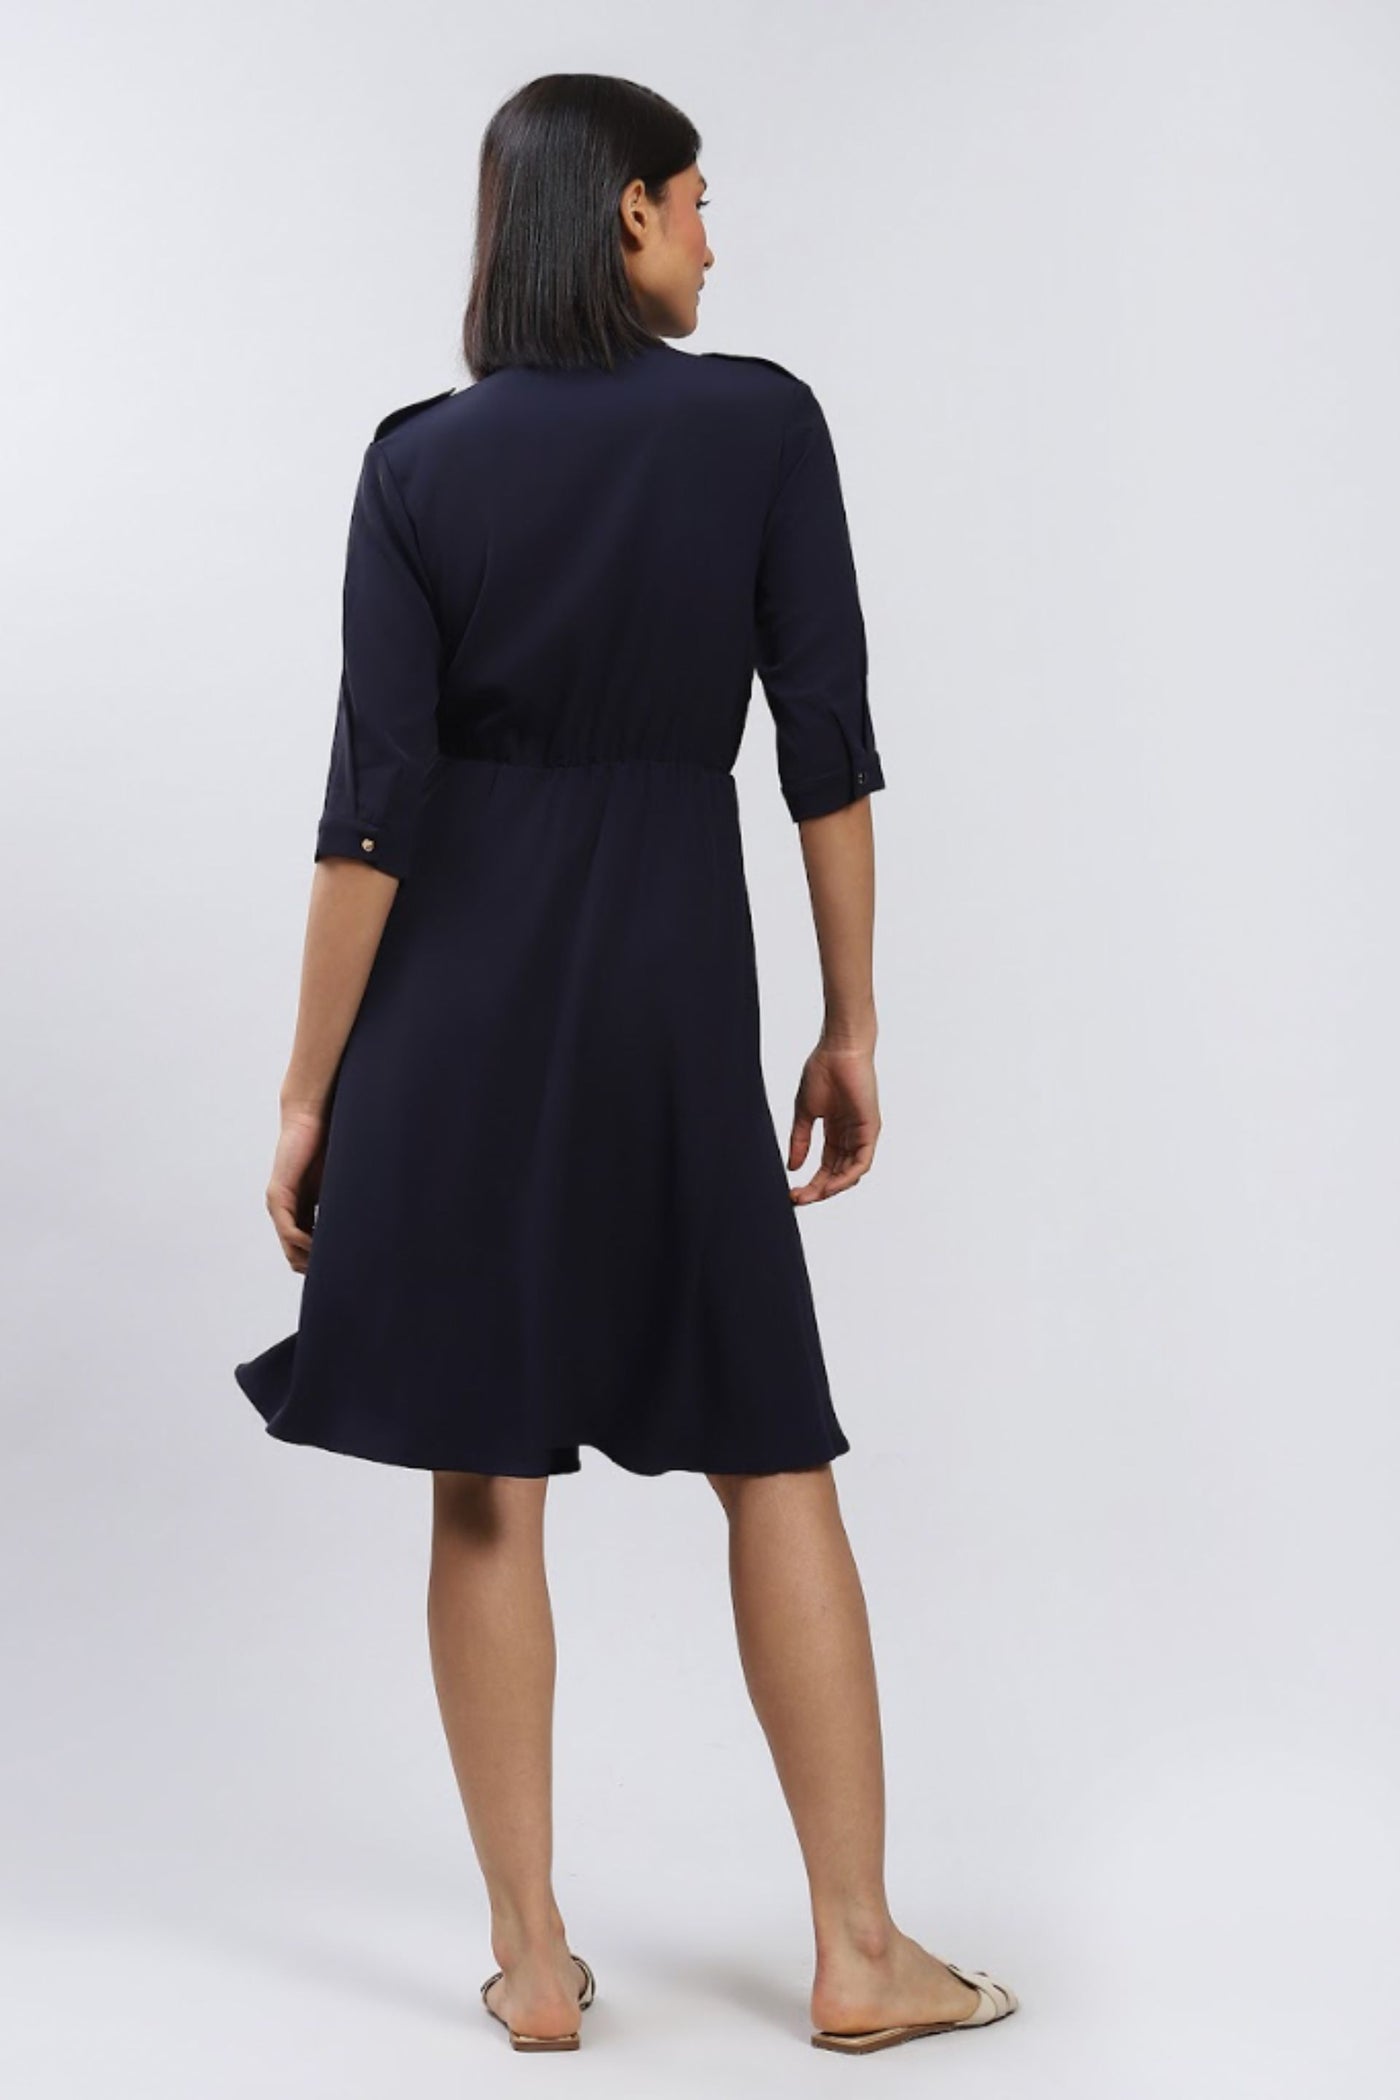 Label Ritu Kumar Navy blue midi dress with knot detail Indian designer wear online shopping melange singapore